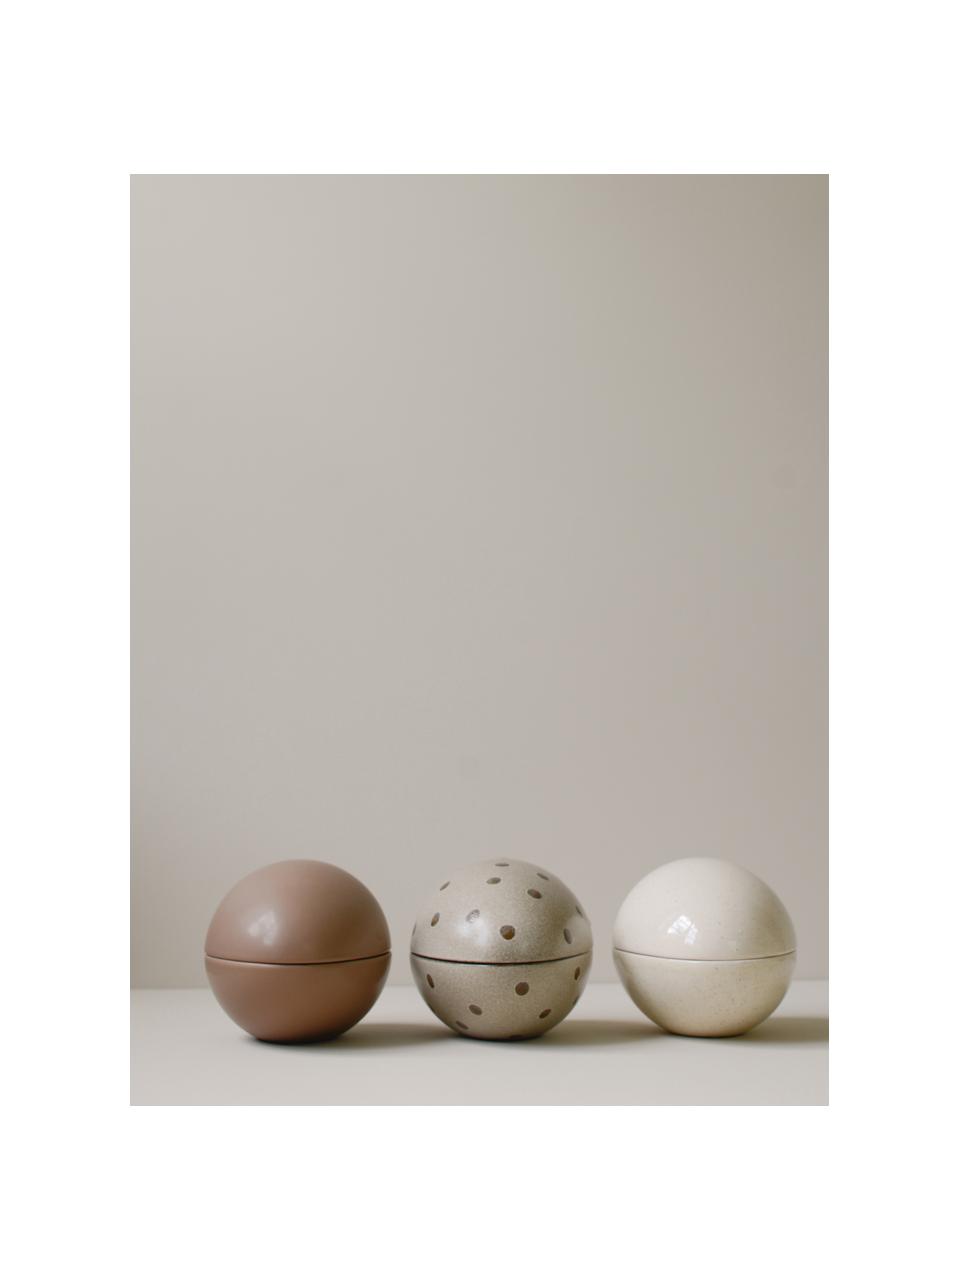 Bomboniera pasquale Nest, Ceramica, Bianco crema lucido e maculato, Larg. 18 x Alt. 13 cm